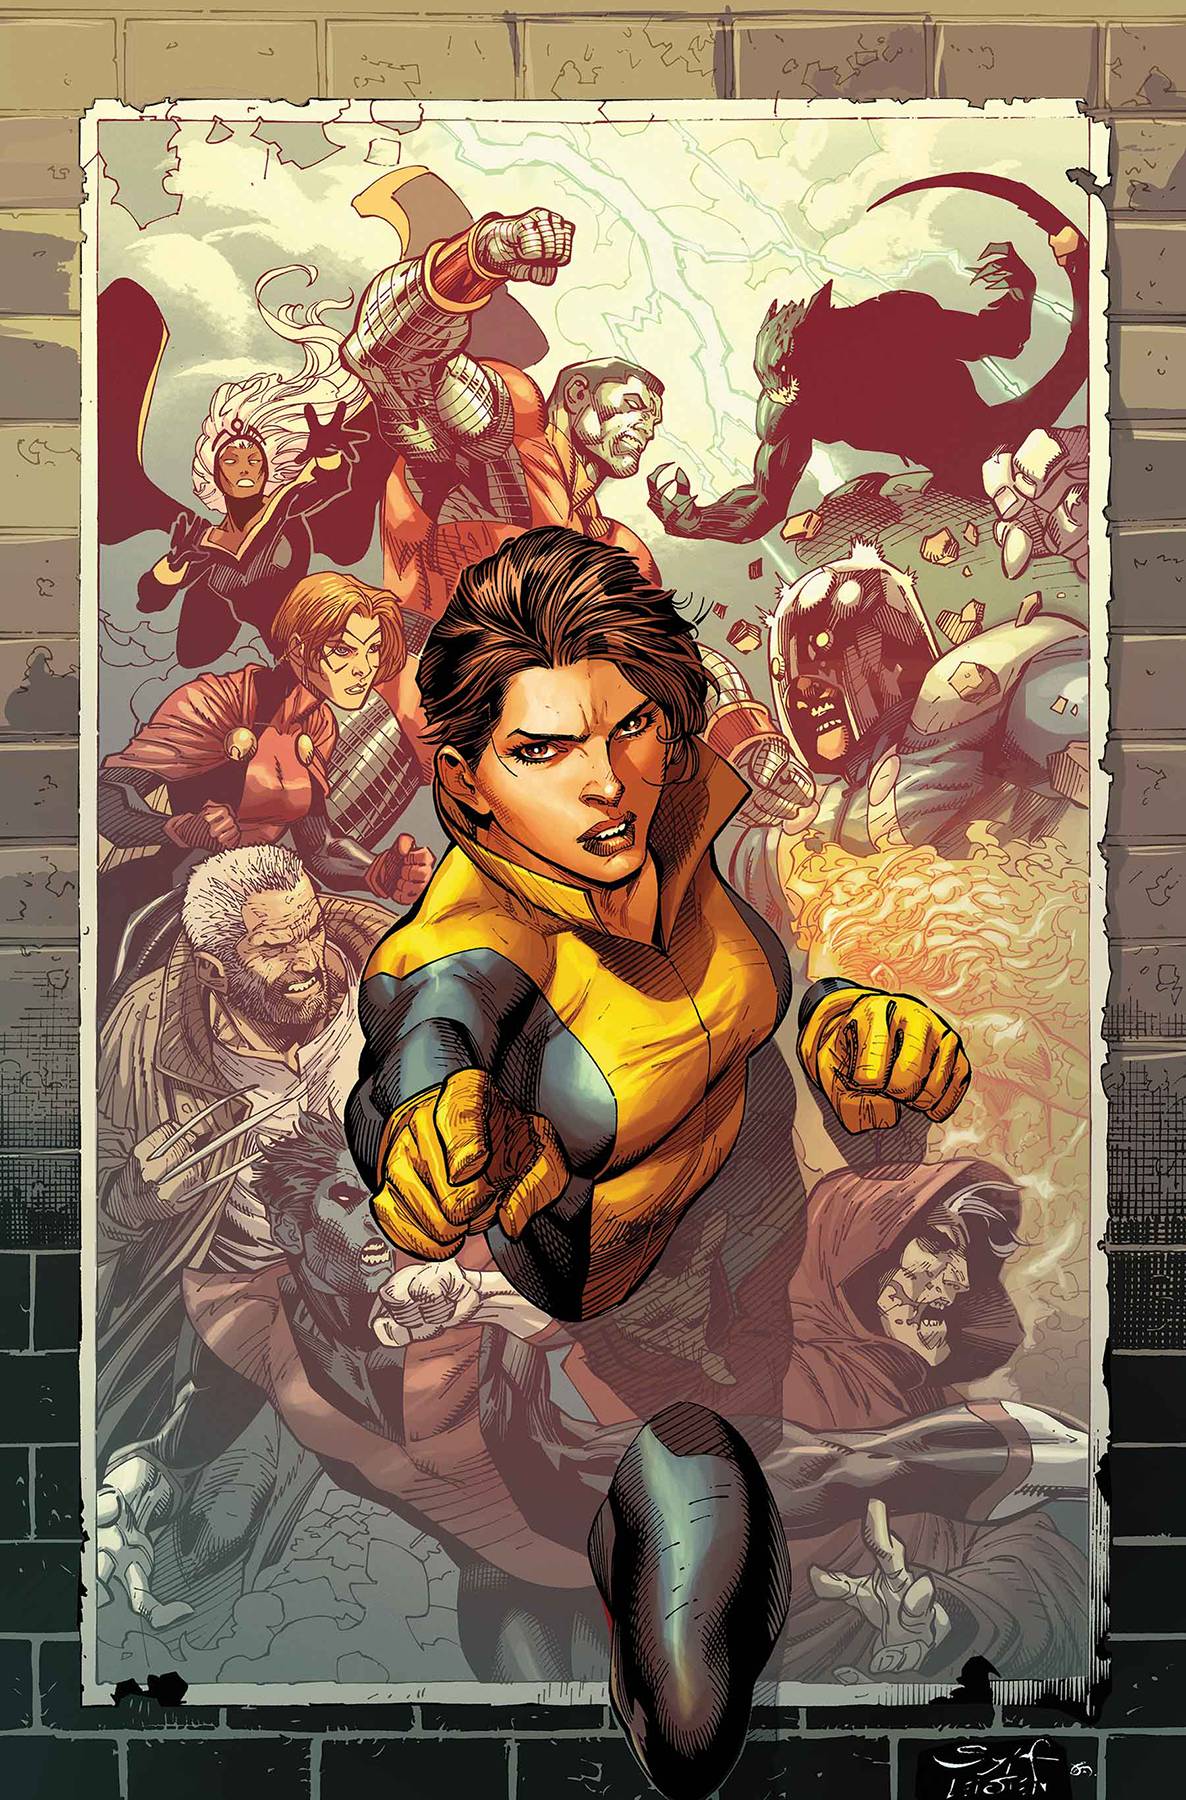 X-Men Gold #3 (2017)